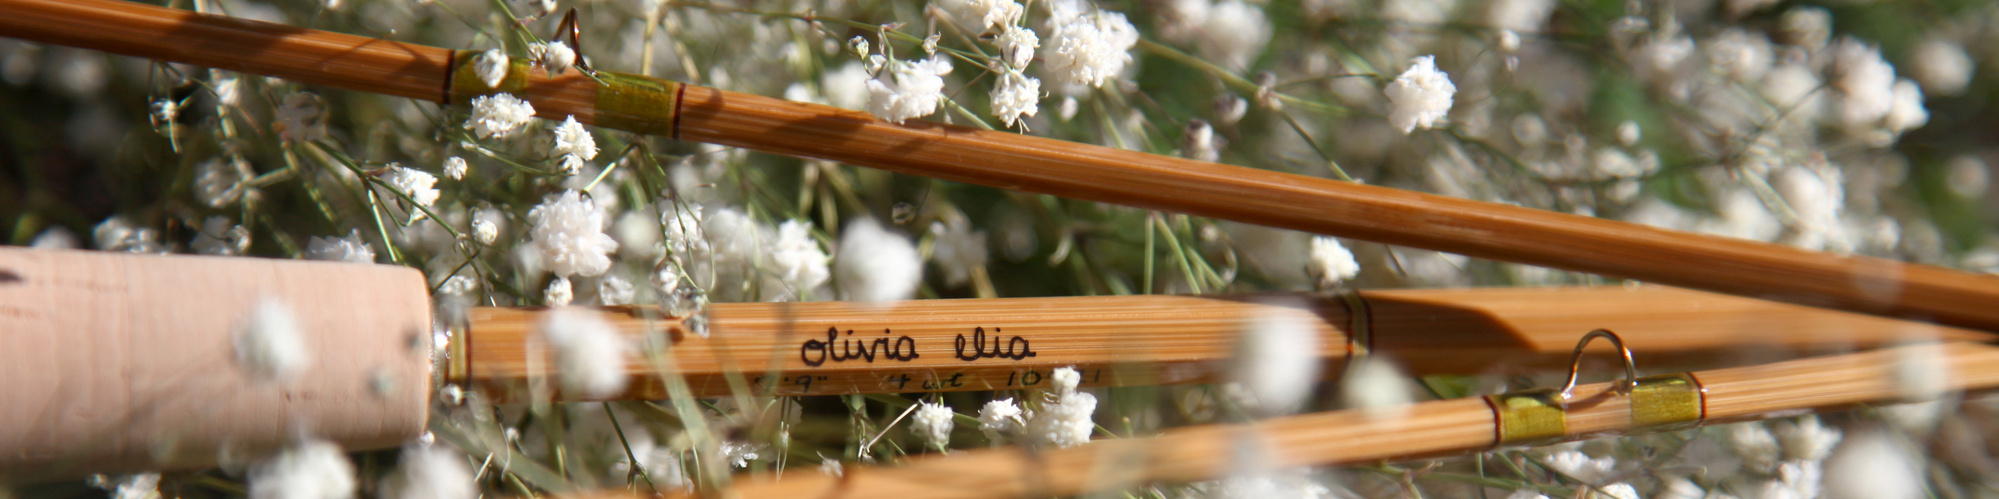 Olivia Elia Bamboo Fly Rods - Olivia Elia's Portfolio